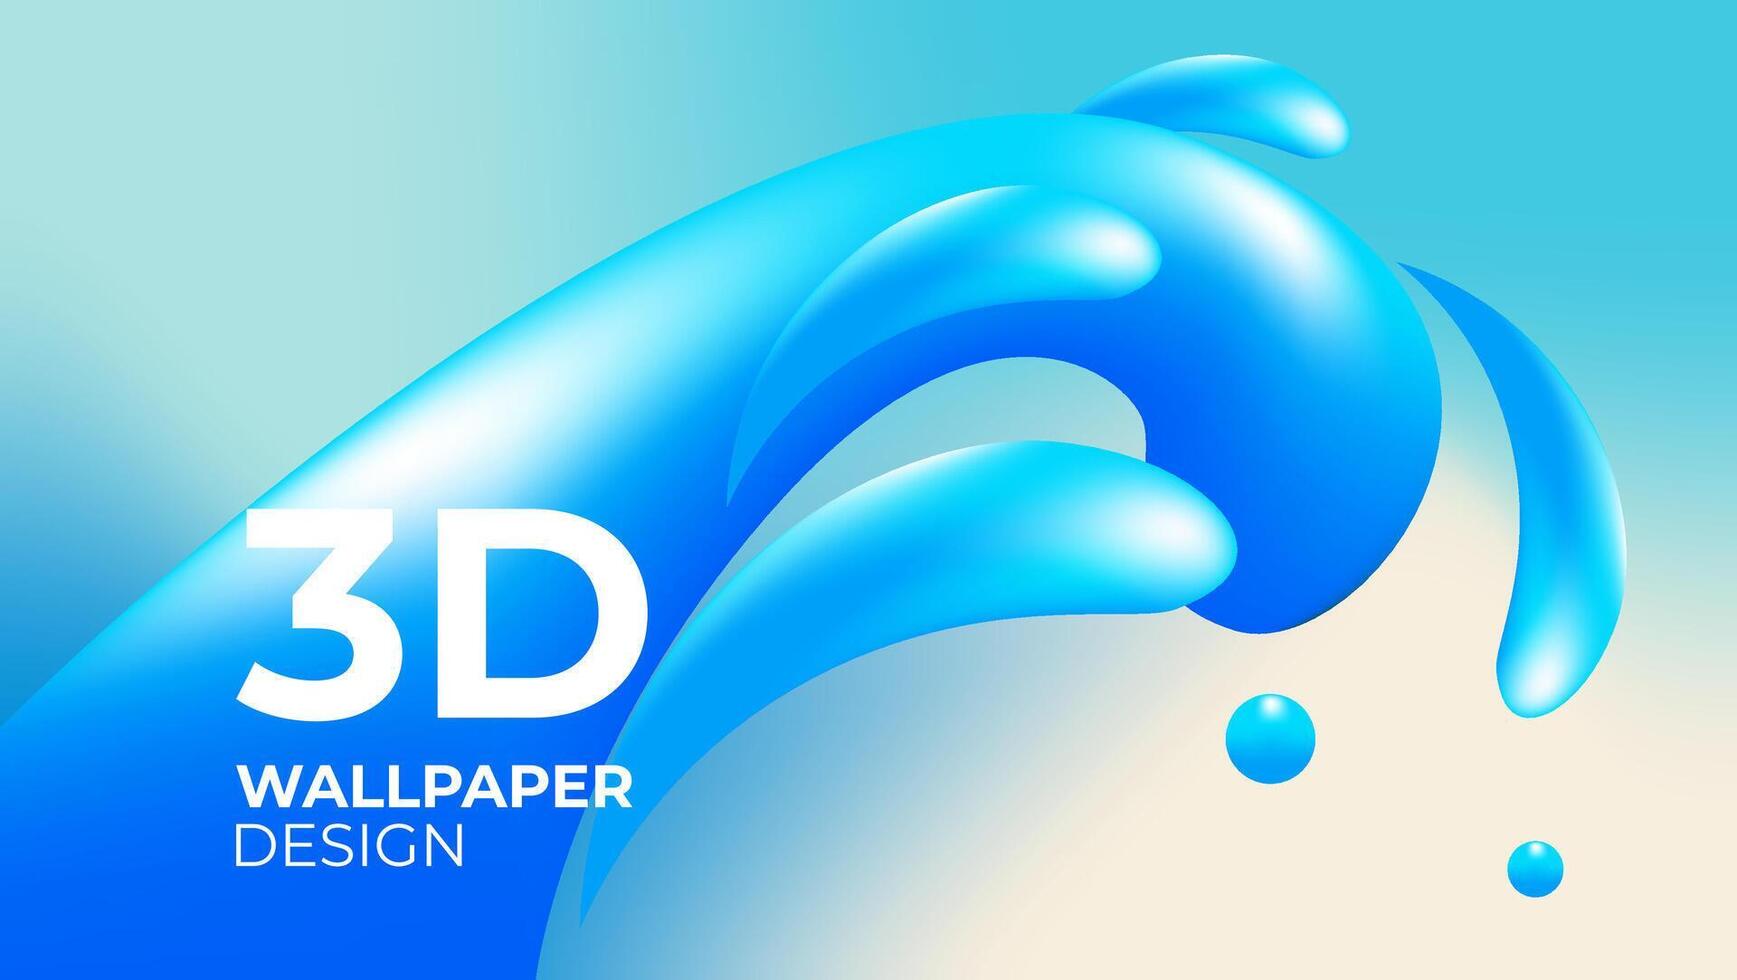 3d abstract blue fluid wallpaper background. 3d water design. vector illustration